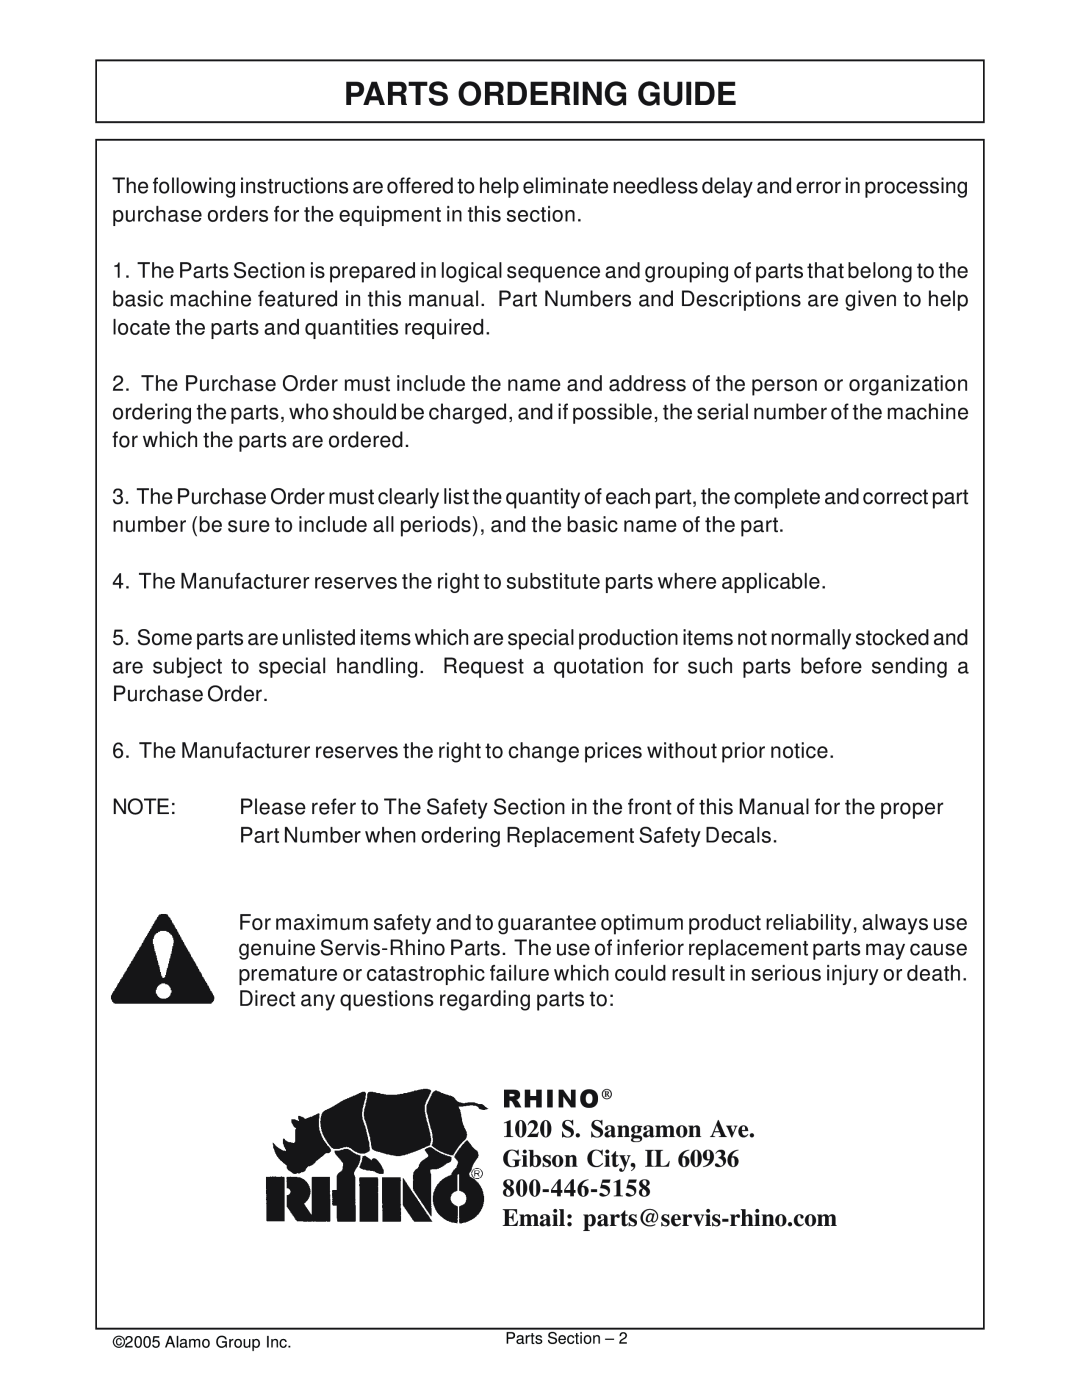 Servis-Rhino SE4 manual Parts Ordering Guide, Rhino, 1020 S. Sangamon Ave Gibson City, IL 